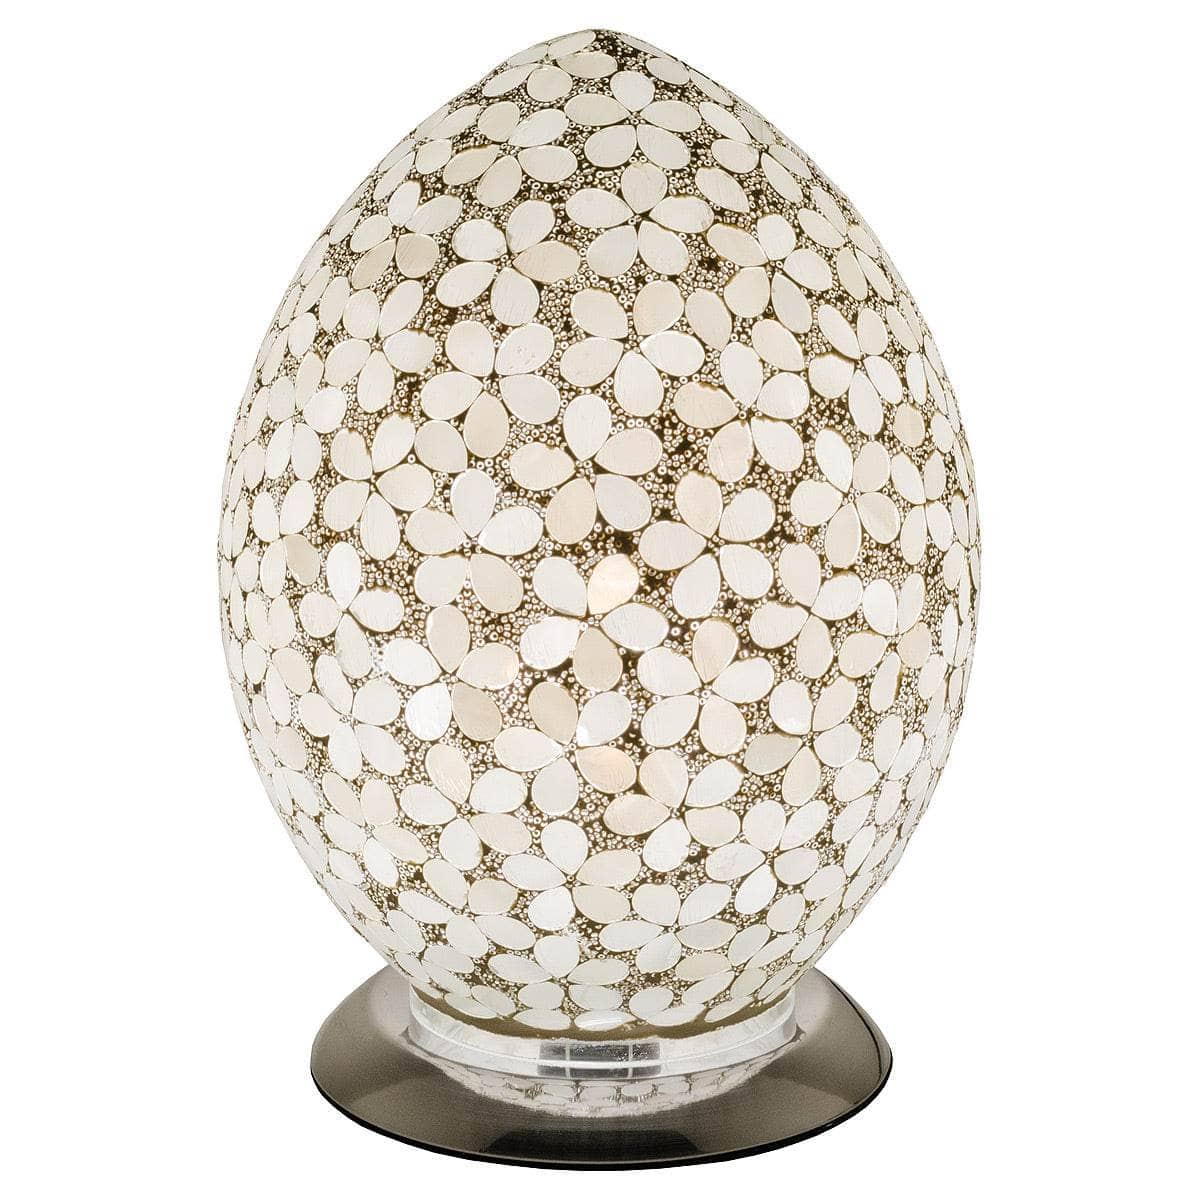 Homeware  -  Medium Mosaic Glass Egg Lamp – Opaque Flowers  -  50153442